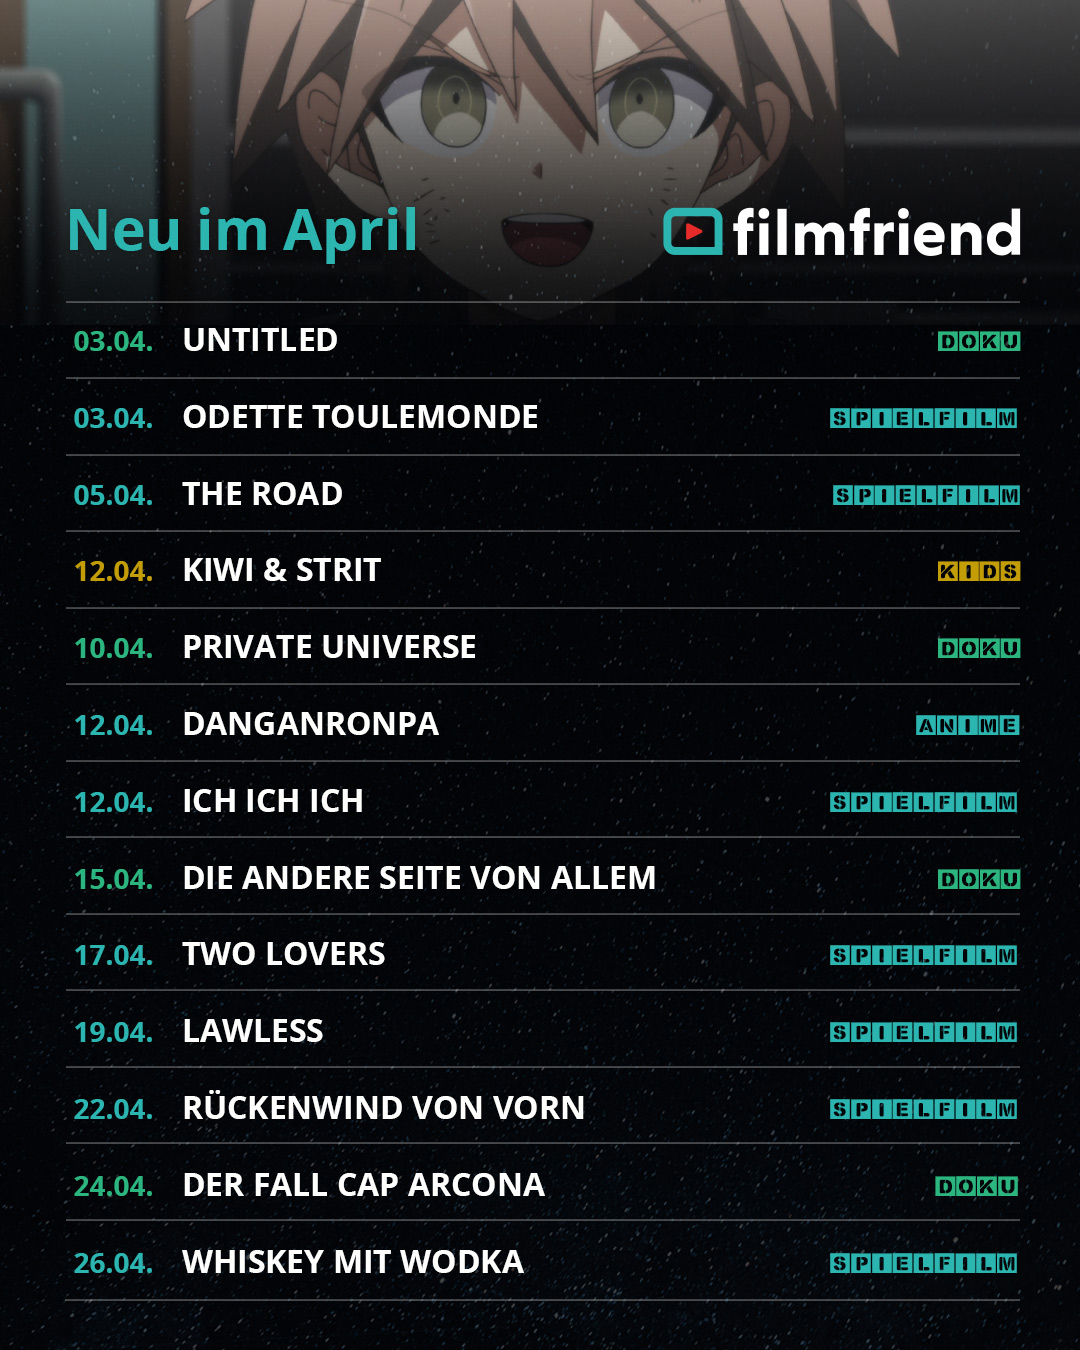 {#Neu-auf-filmfriend_April}